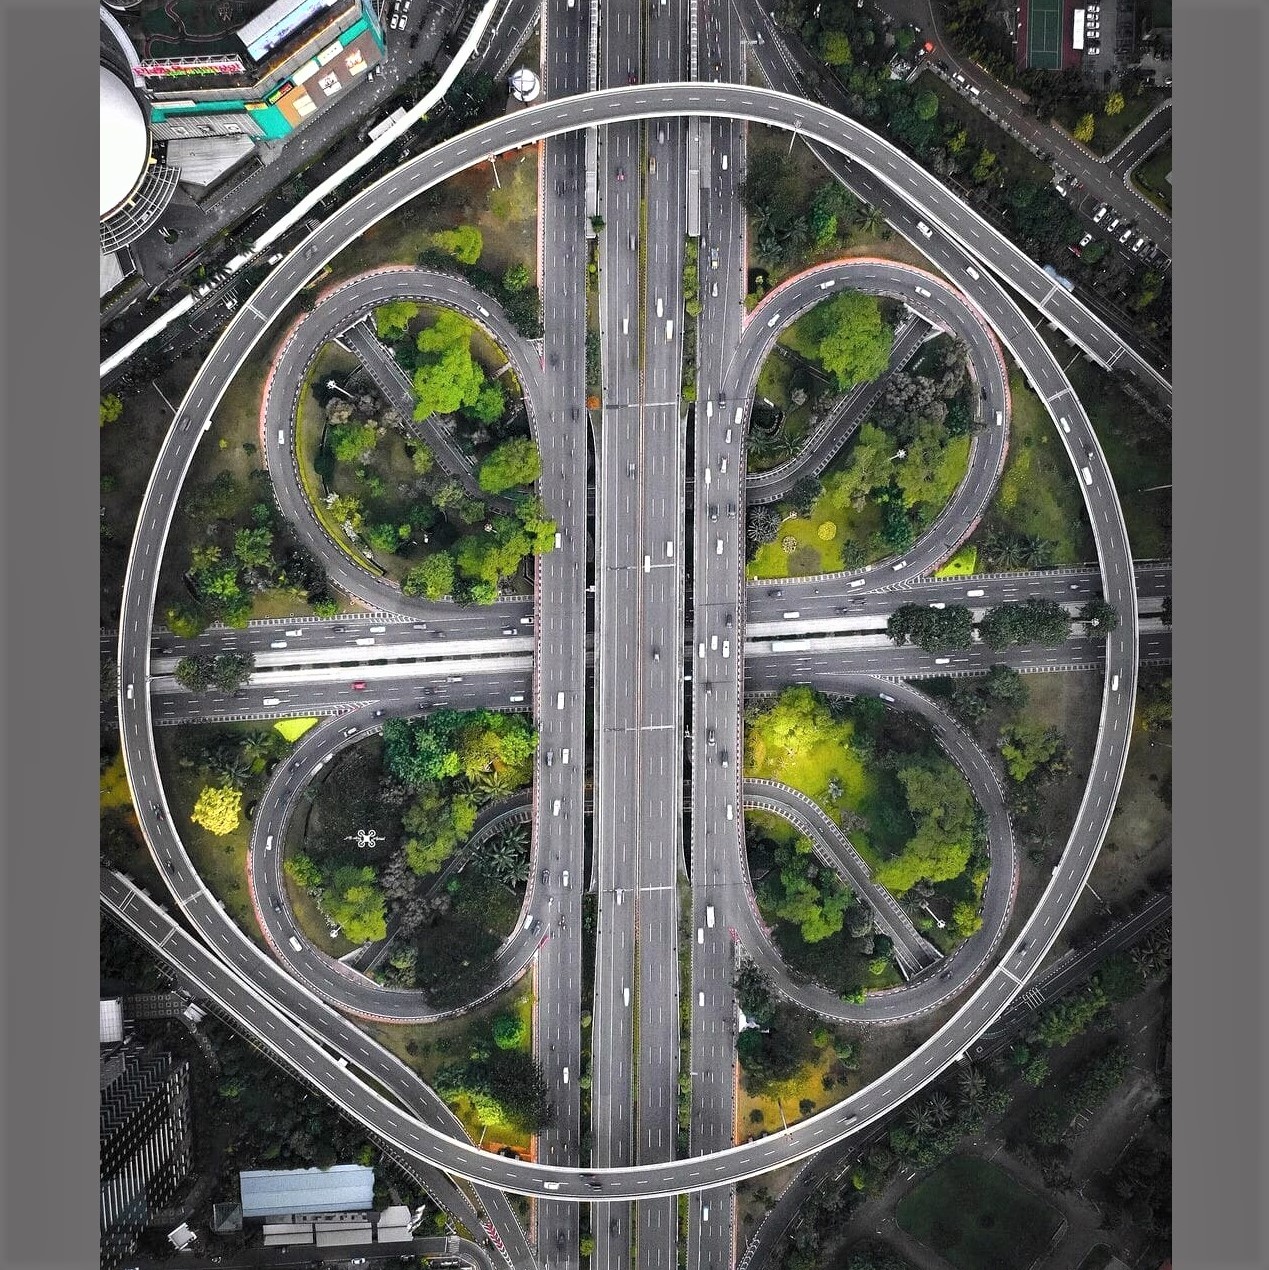 Semanggi highway interchange in Jakarta, Indonesia, at the junction of Gatot Subroto Road and Sudirman Road